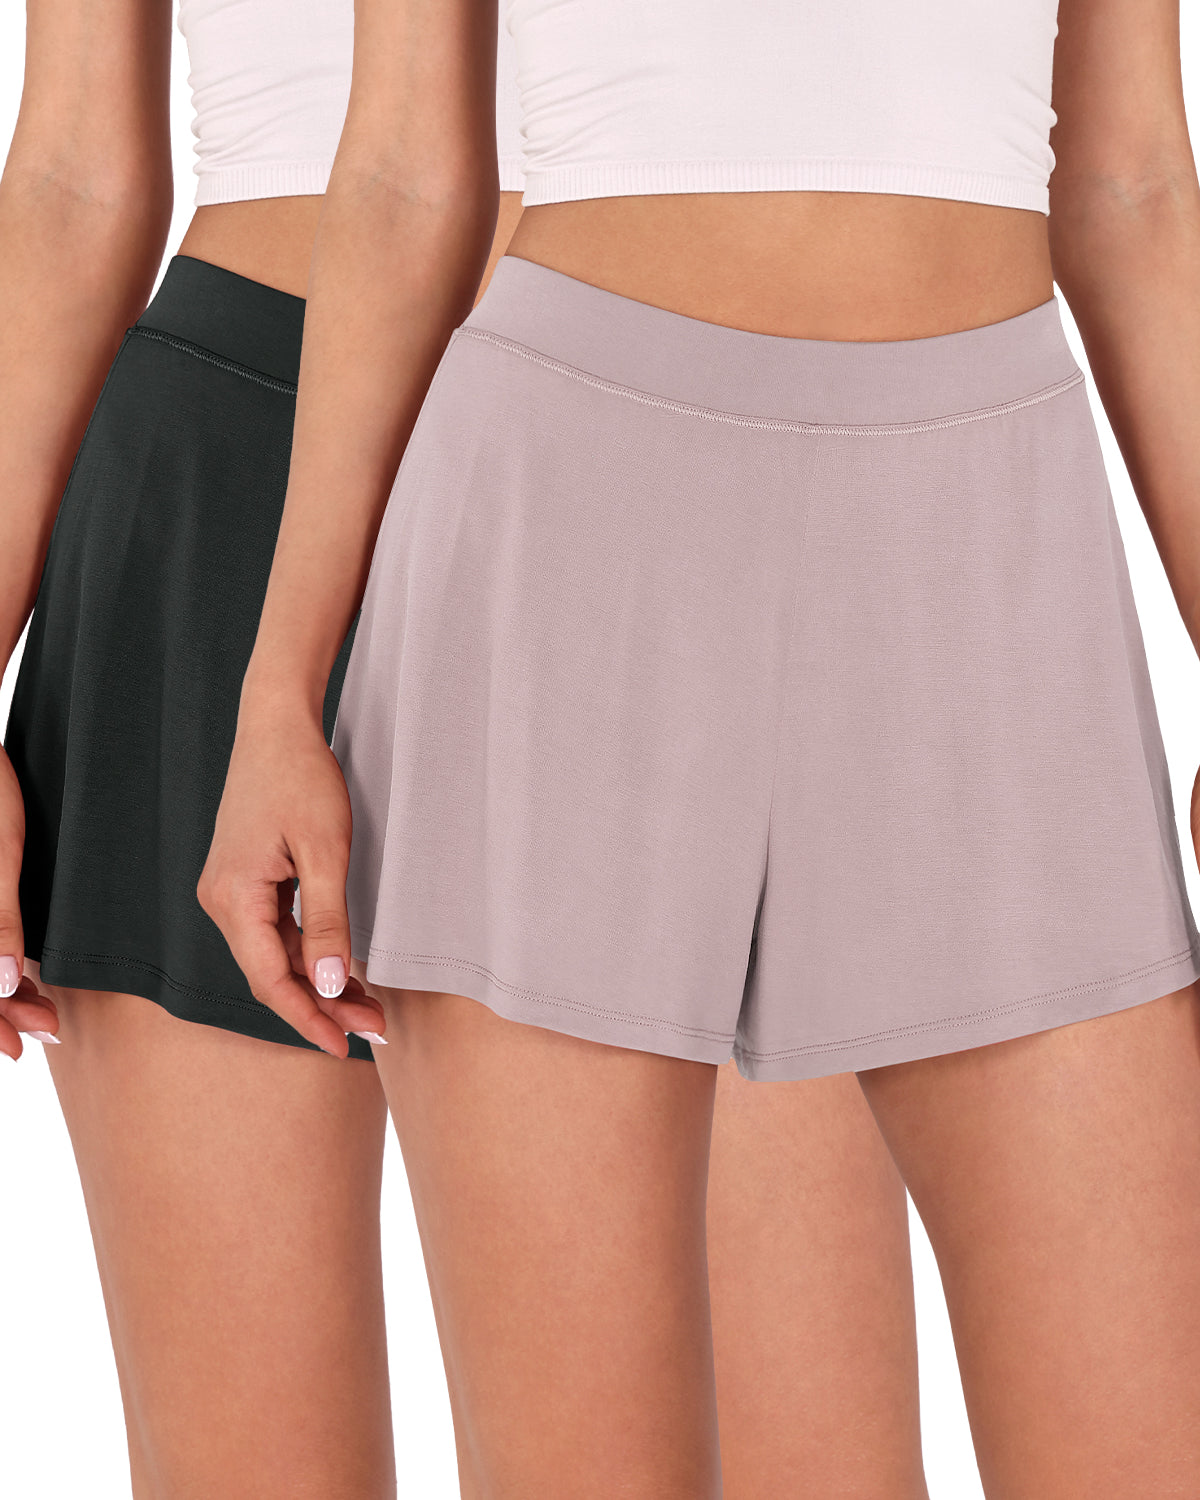 2 Pack Modal Soft Lounge Shorts Black+Lavender - ododos